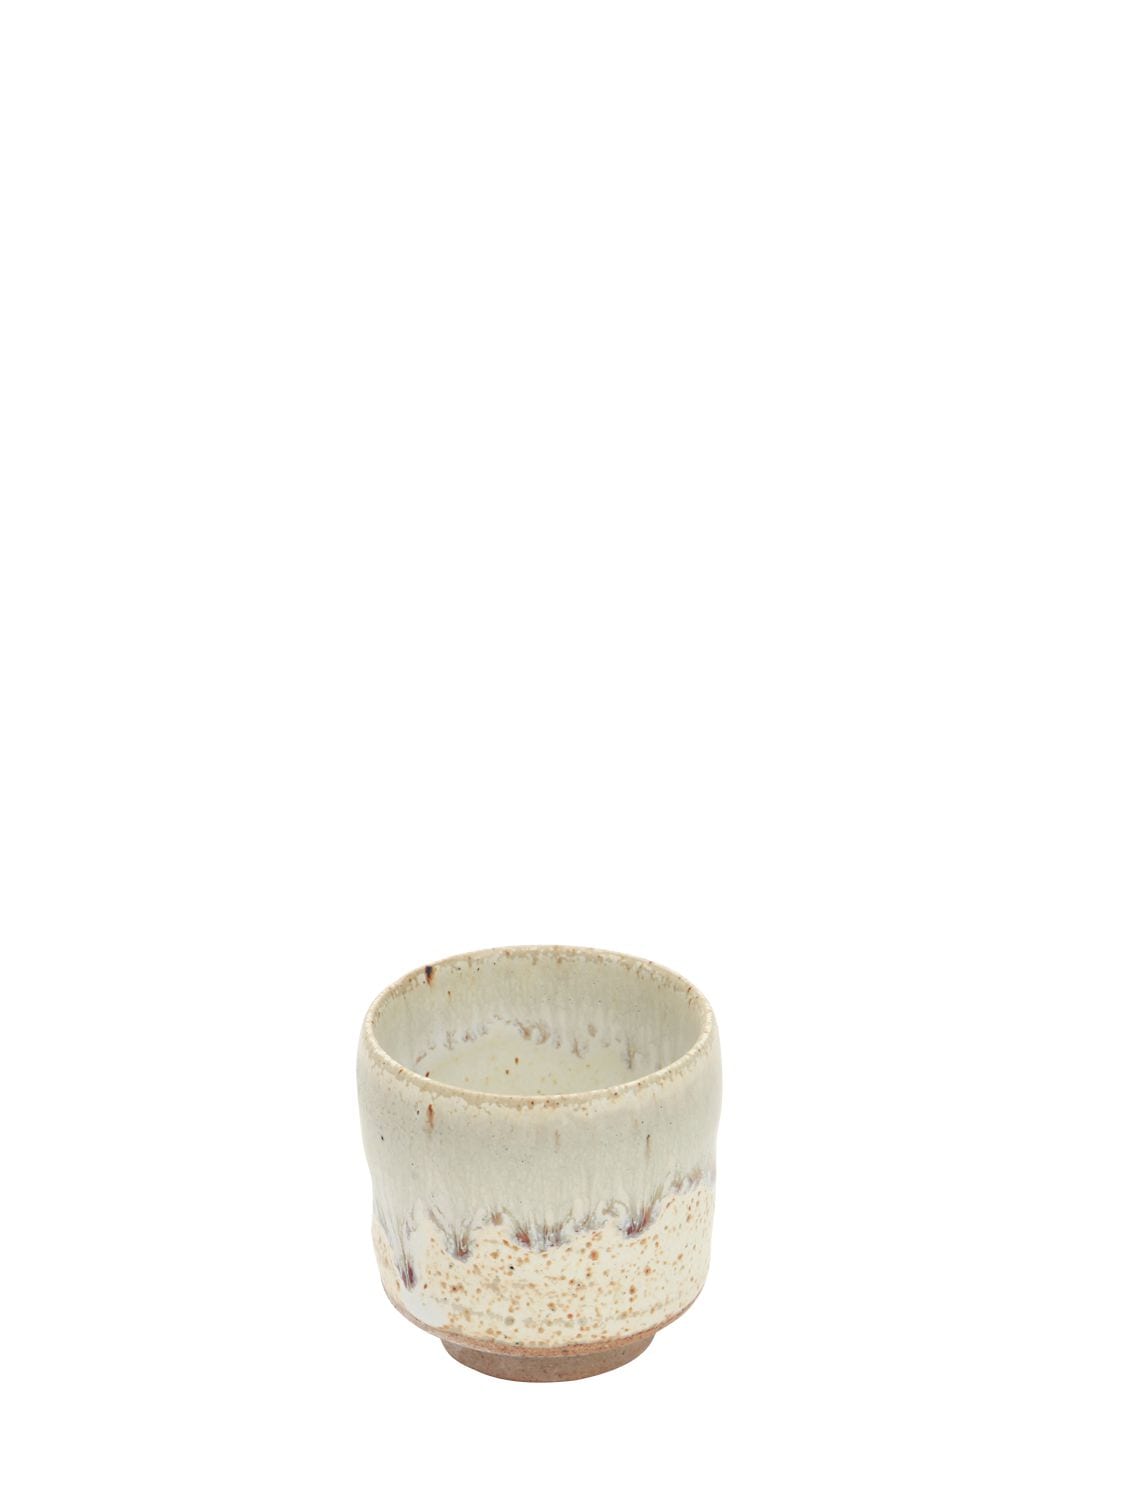 Armani/casa Fusion Ceramic Saké Cups In Grey